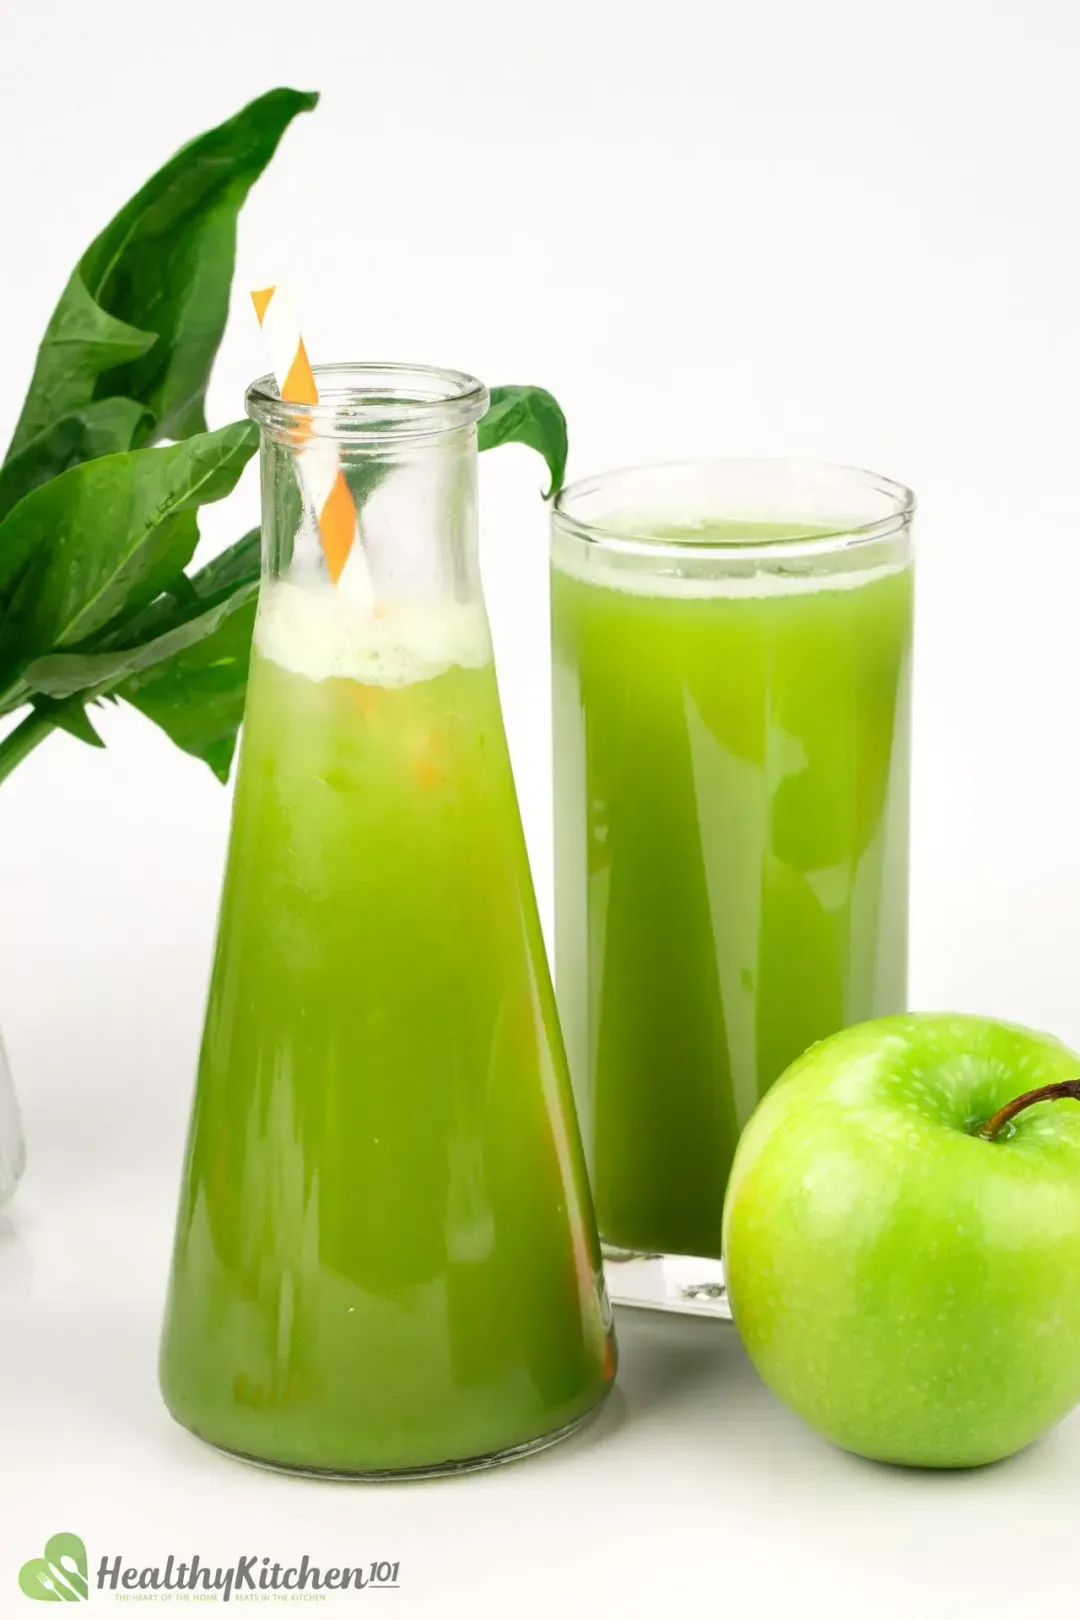 Homemade Green Apple Juice 